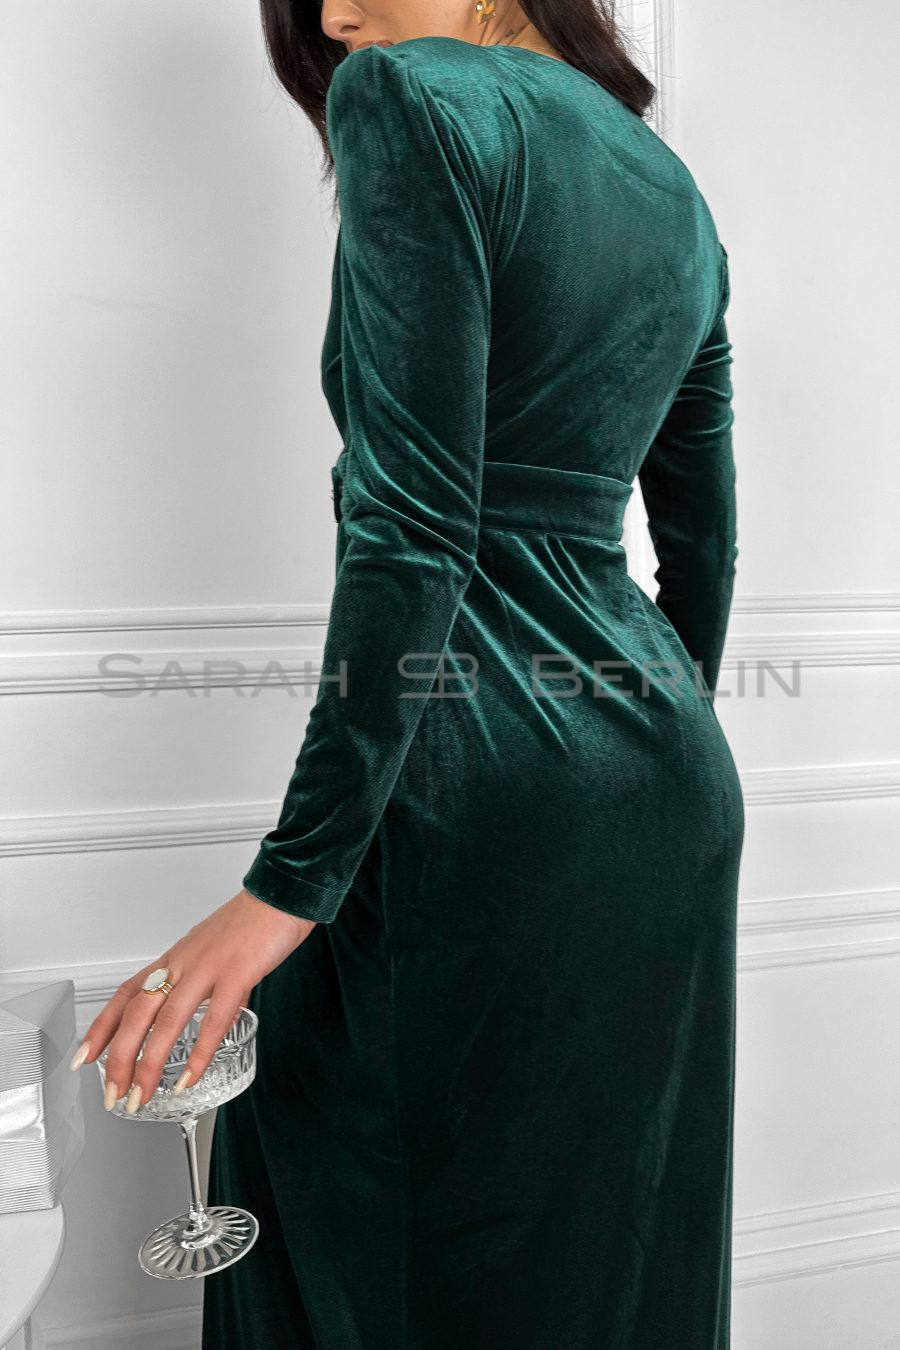 Velvet wrap dress, floor-length, with a figured neckline